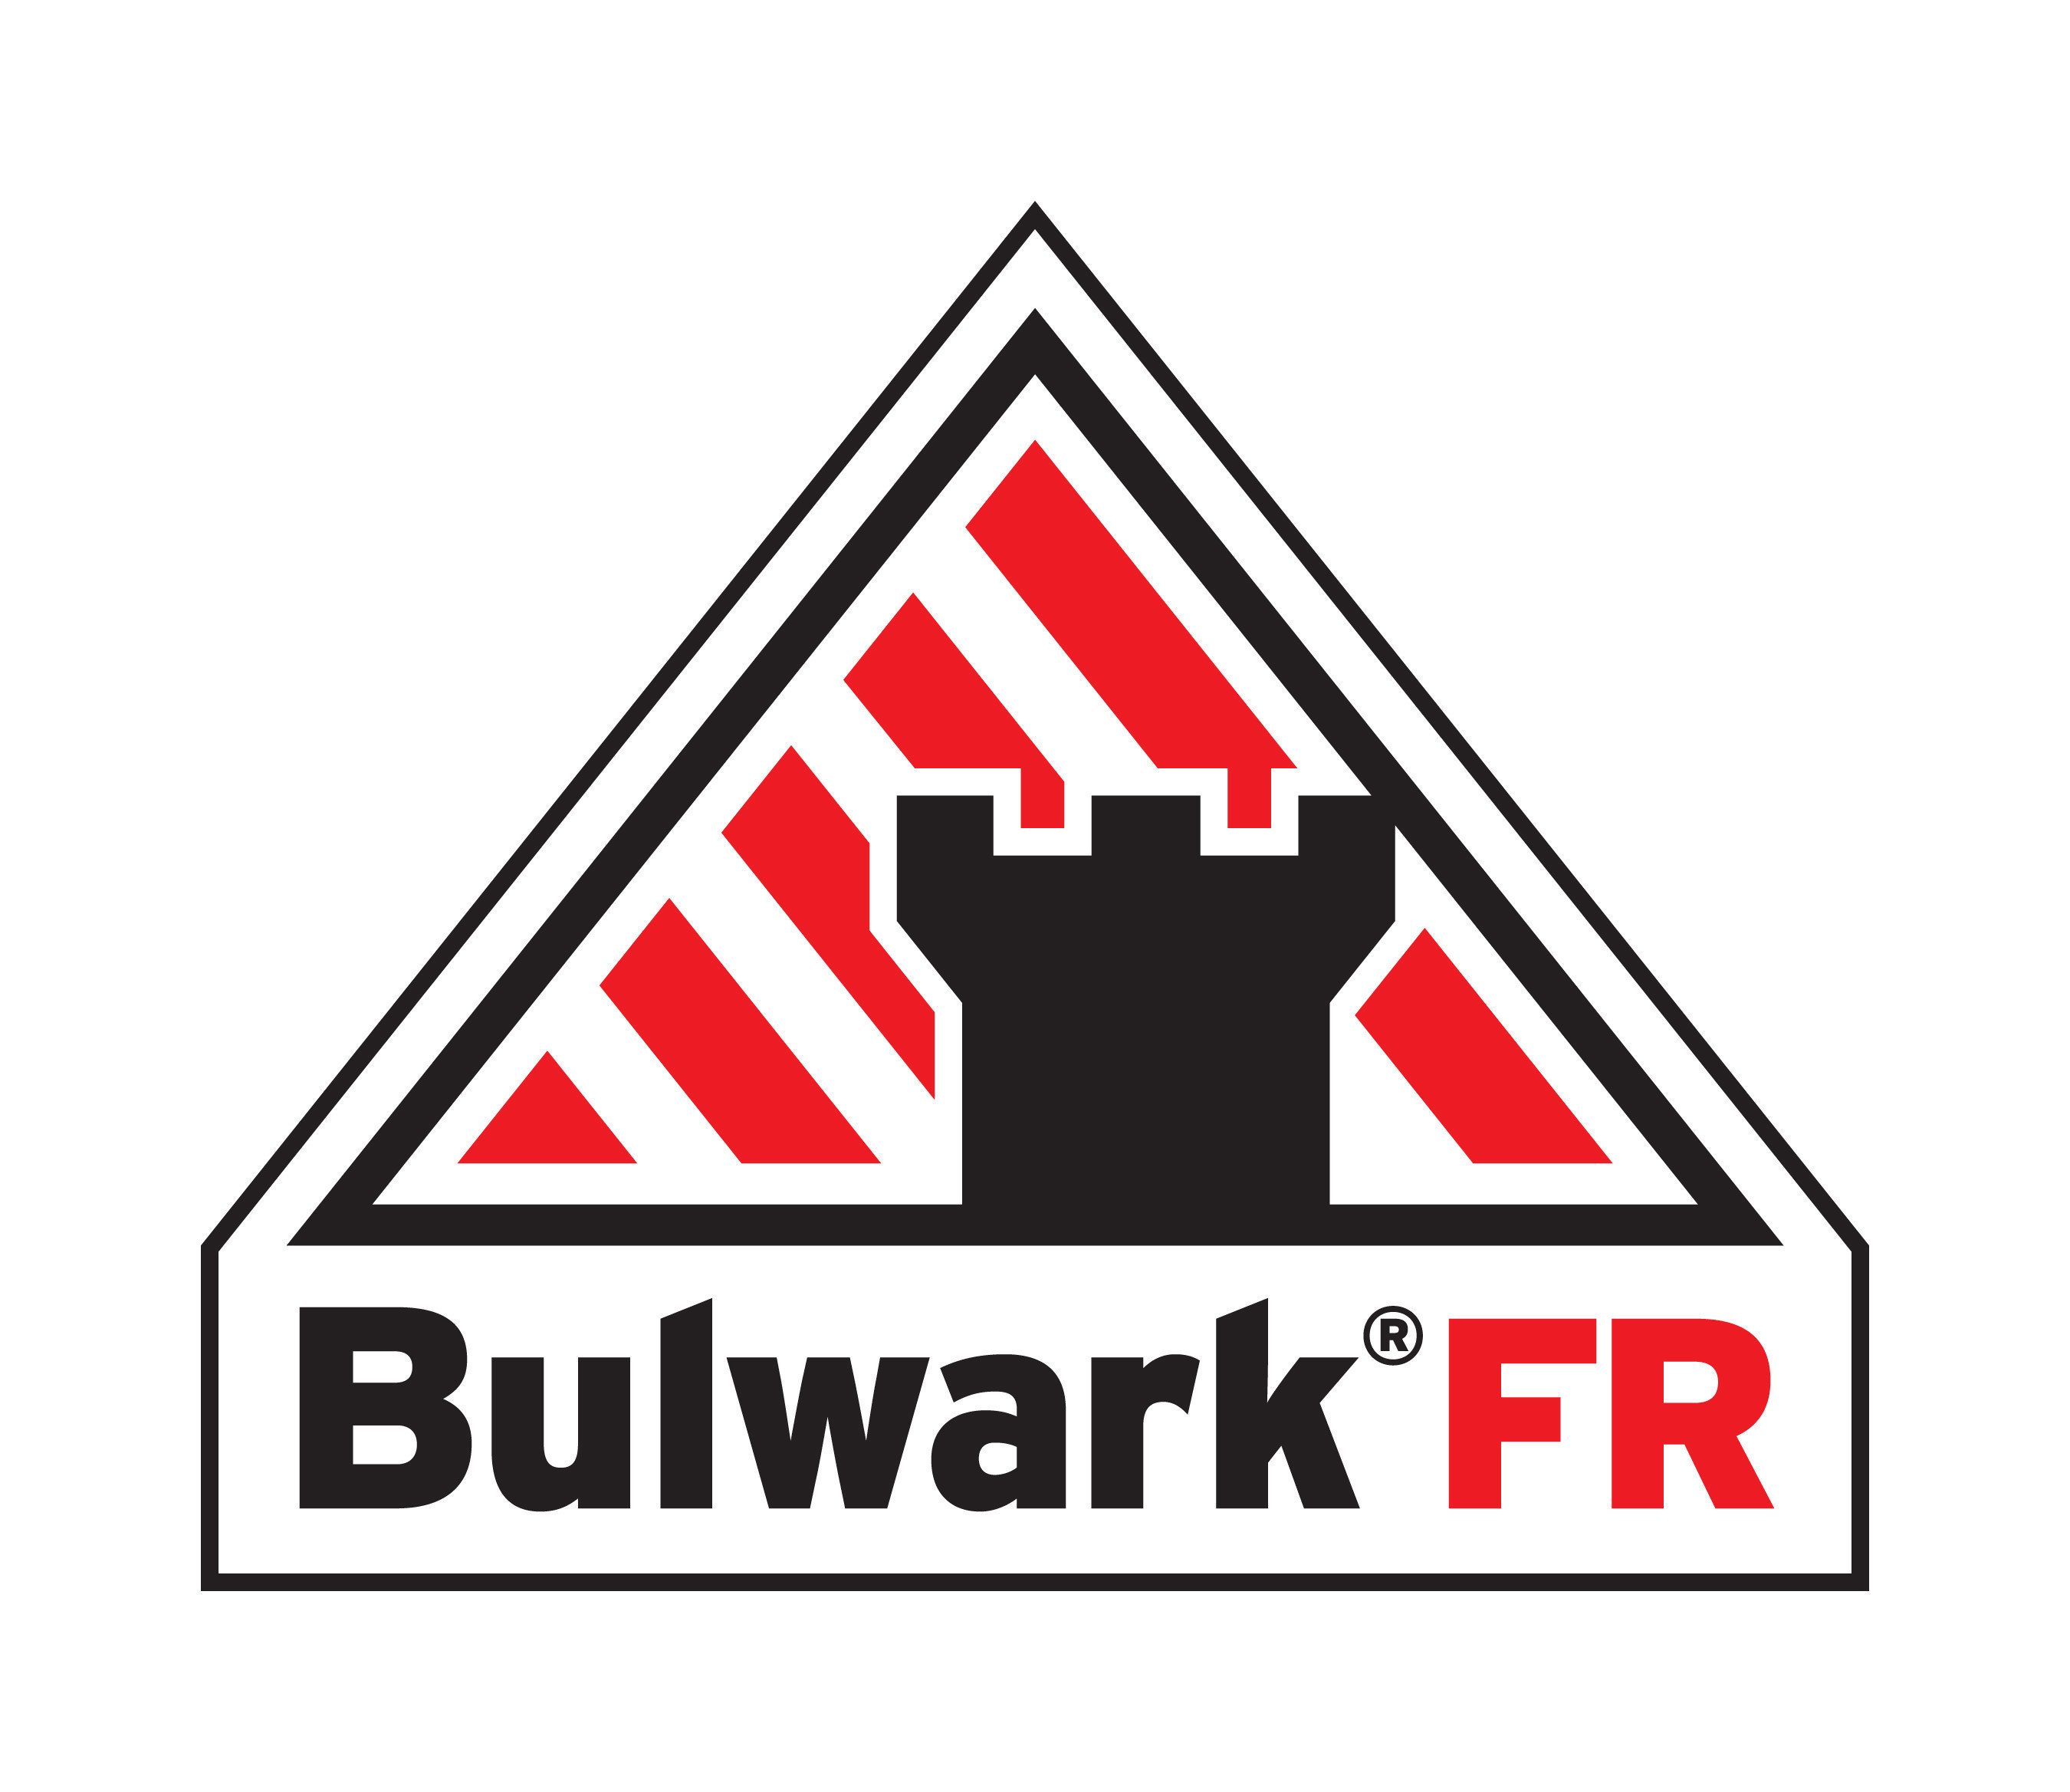 Bulwark Fr Clothing | art-kk.com